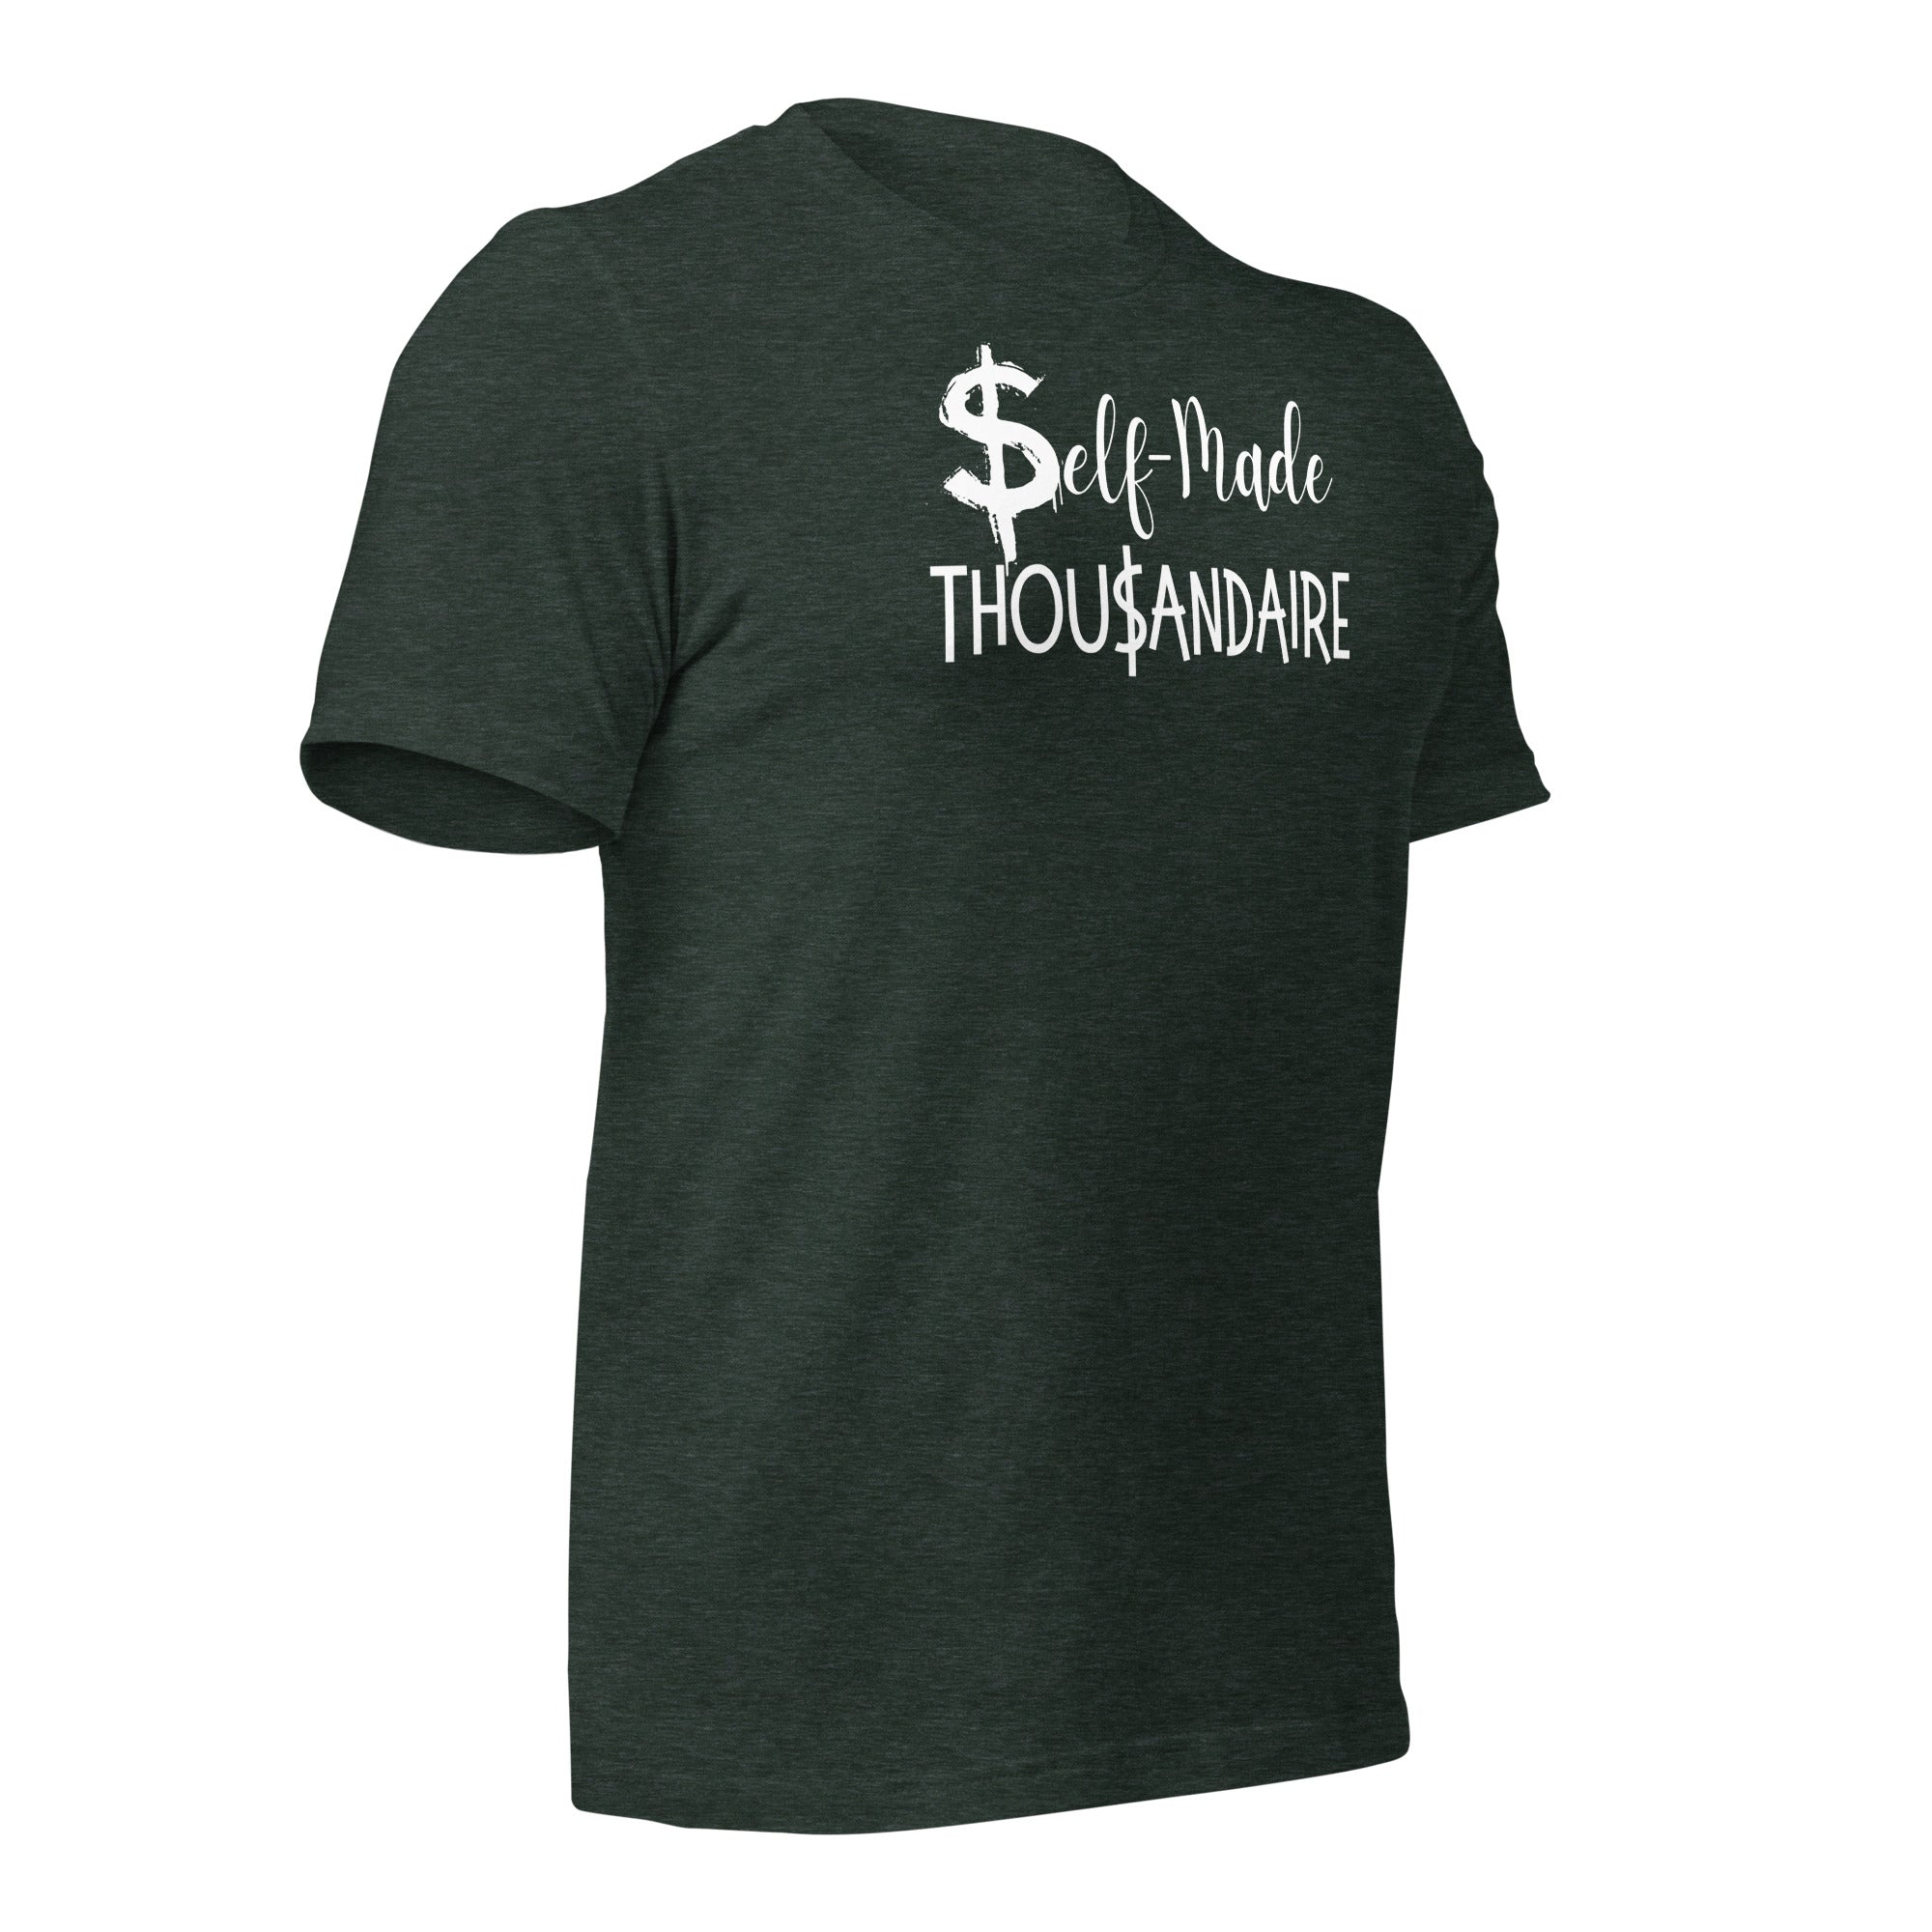 Self-Made Thousandaire Startup T-Shirt